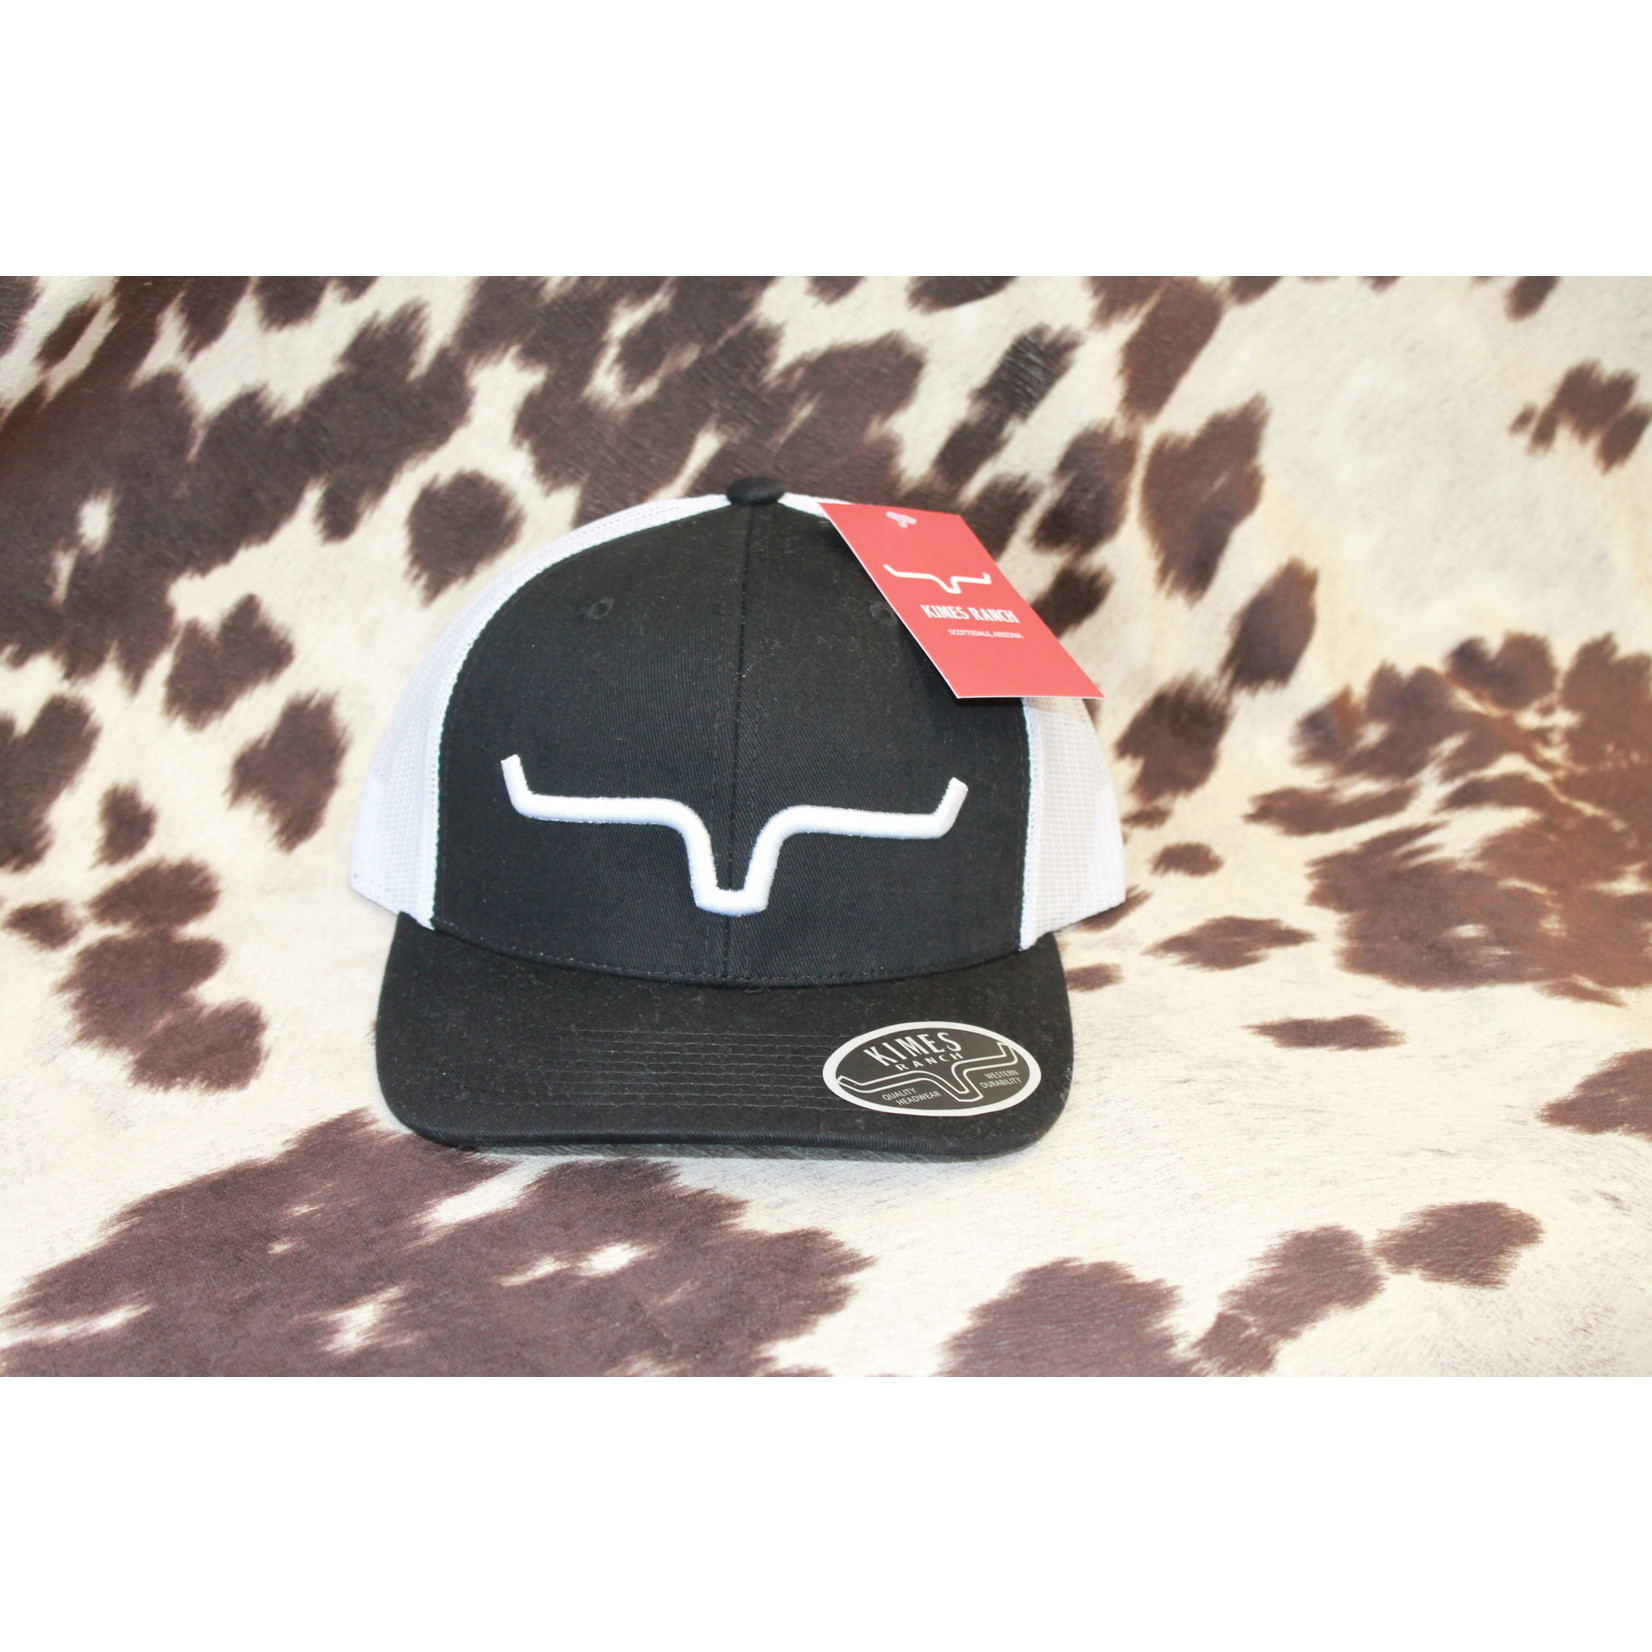 Kimes Ranch Black/White Trucker Hat